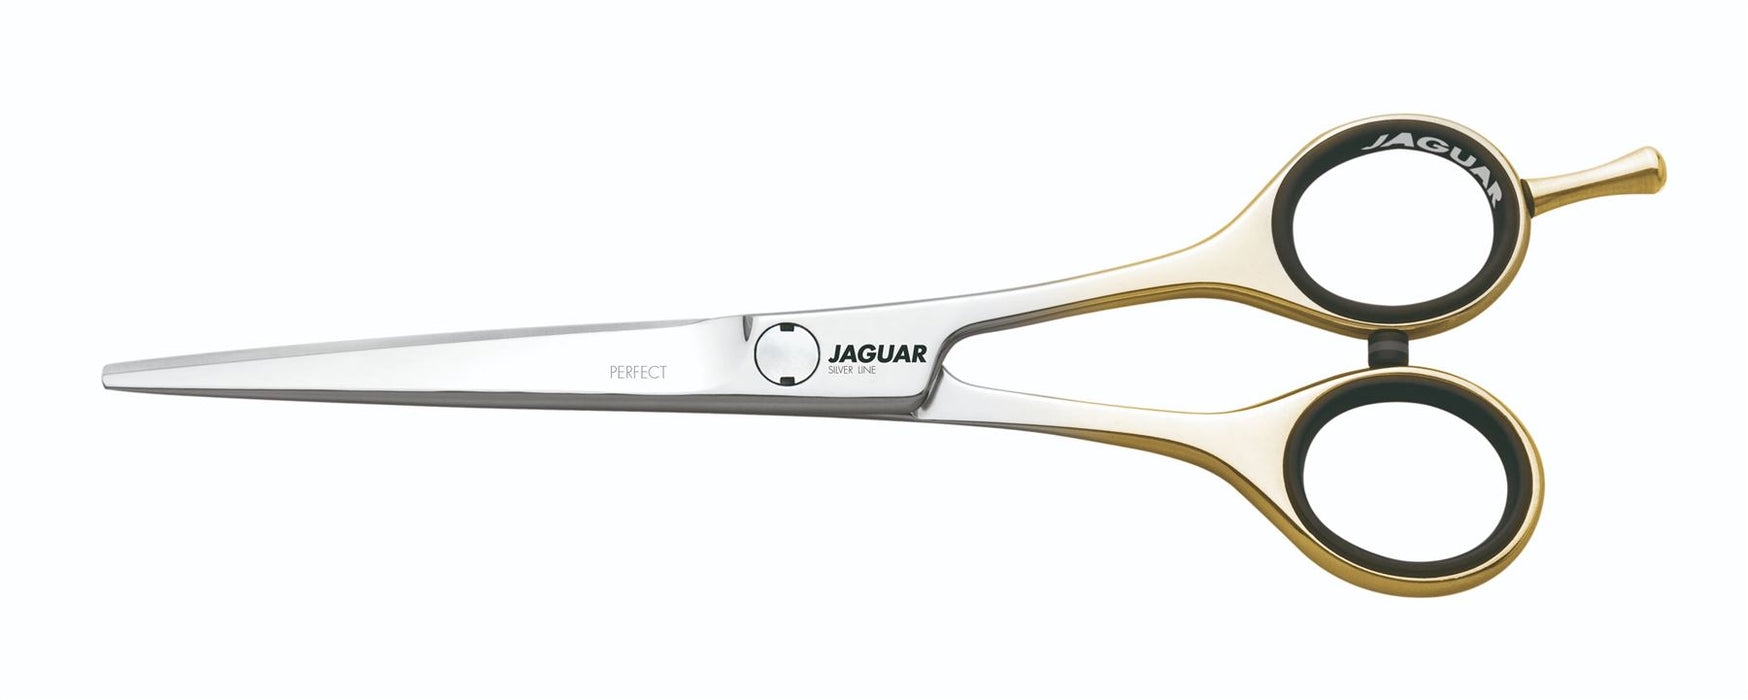 Jaguar Perfect 6" Hairdressing Scissors - 22 Gold Carat Plating